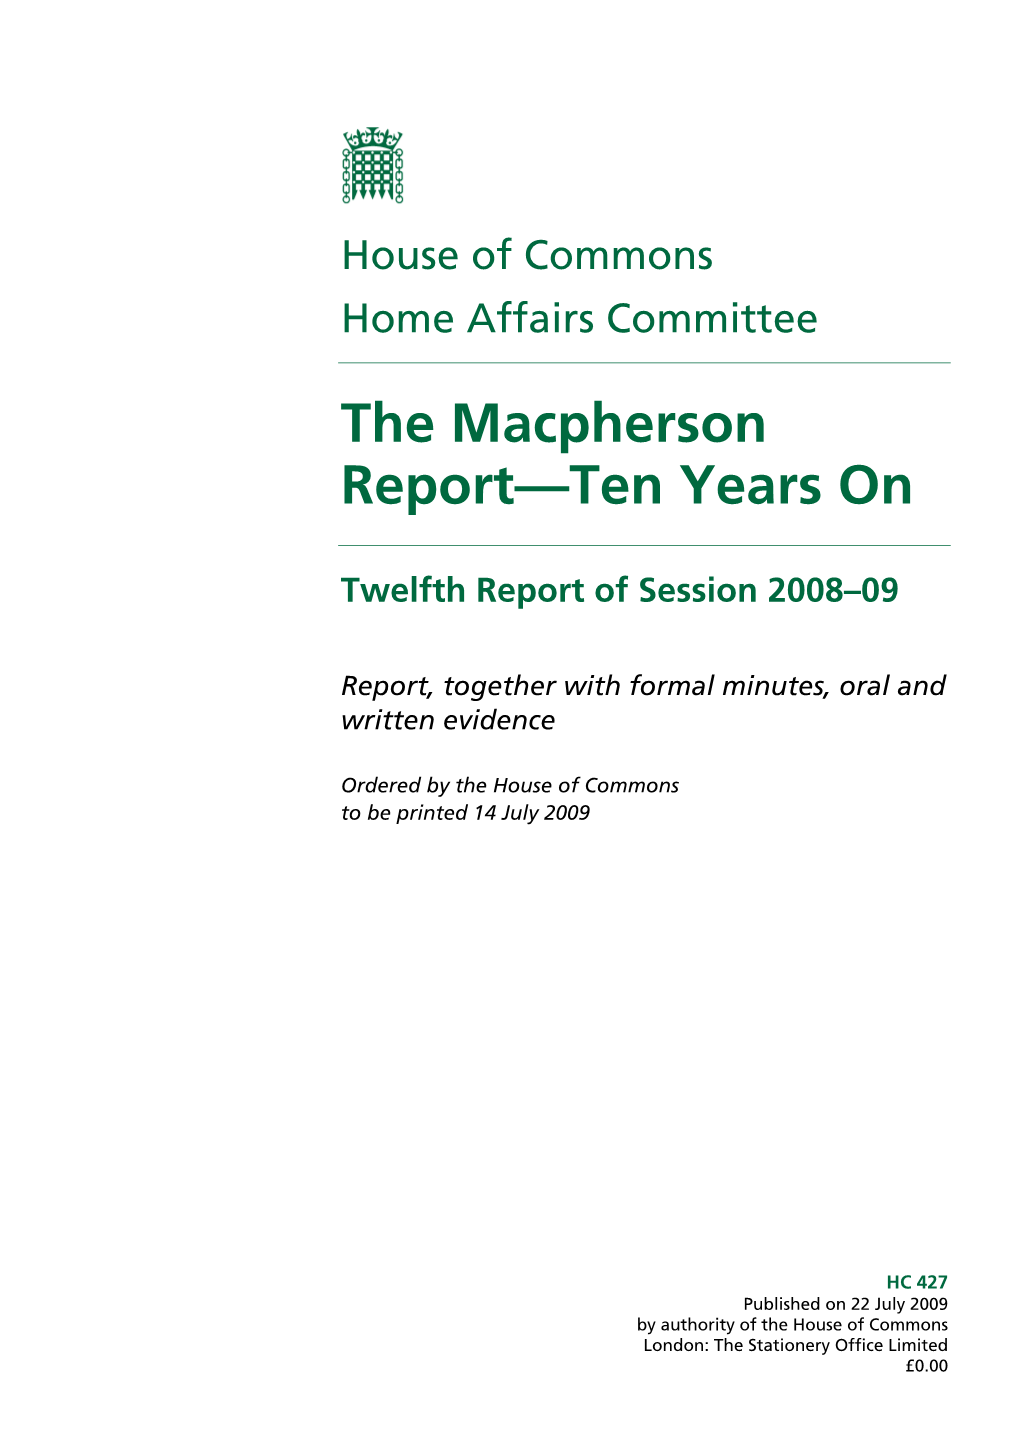 The Macpherson Report—Ten Years On